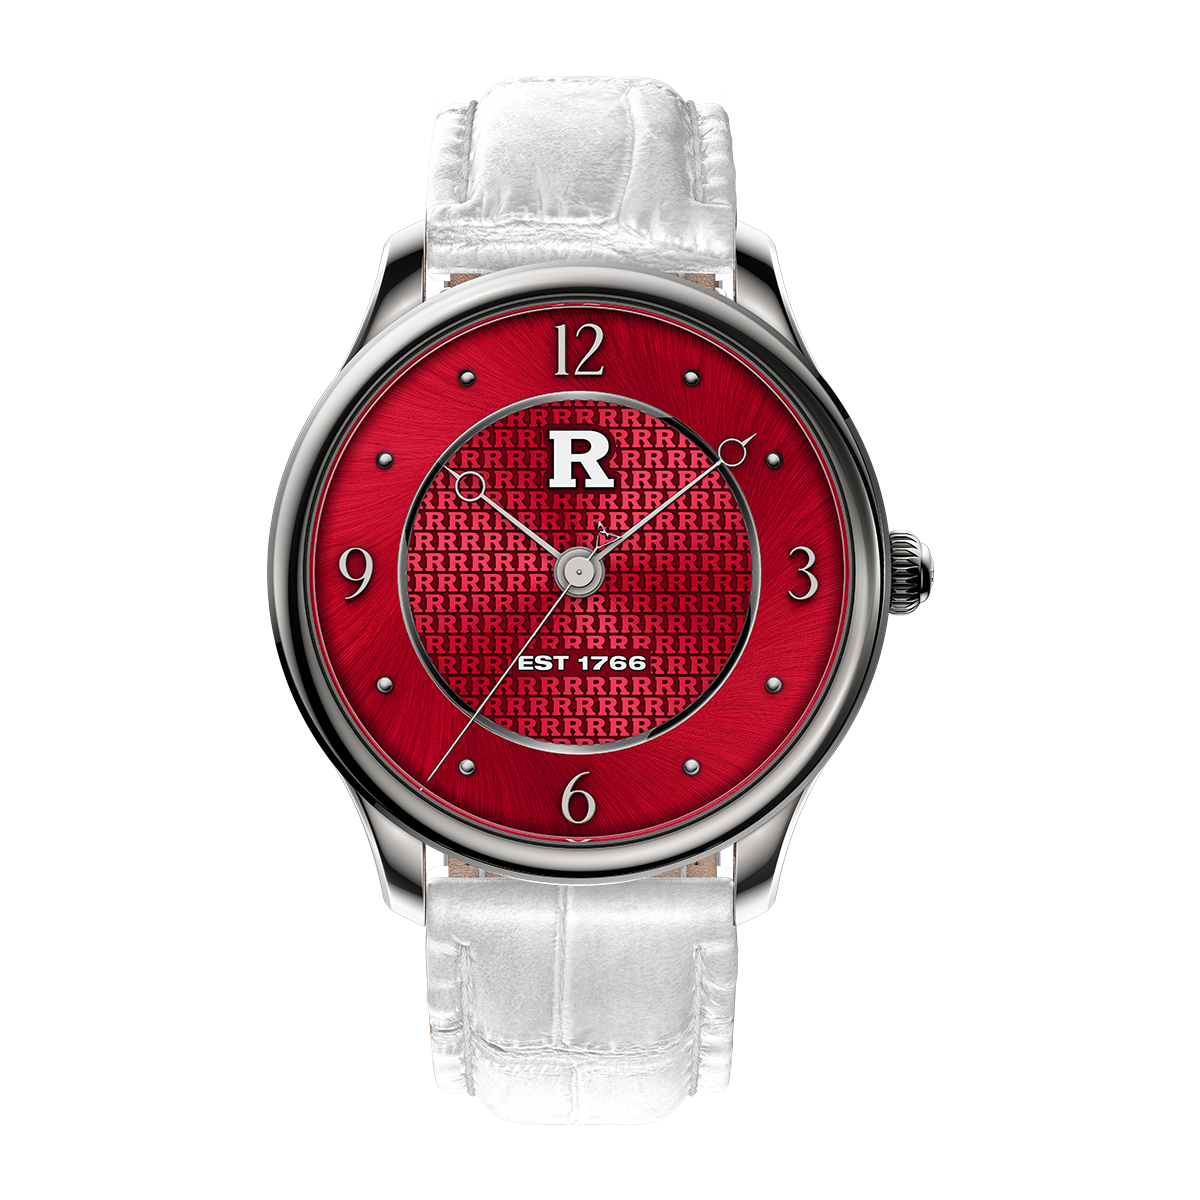 Rutgers University Timepiece